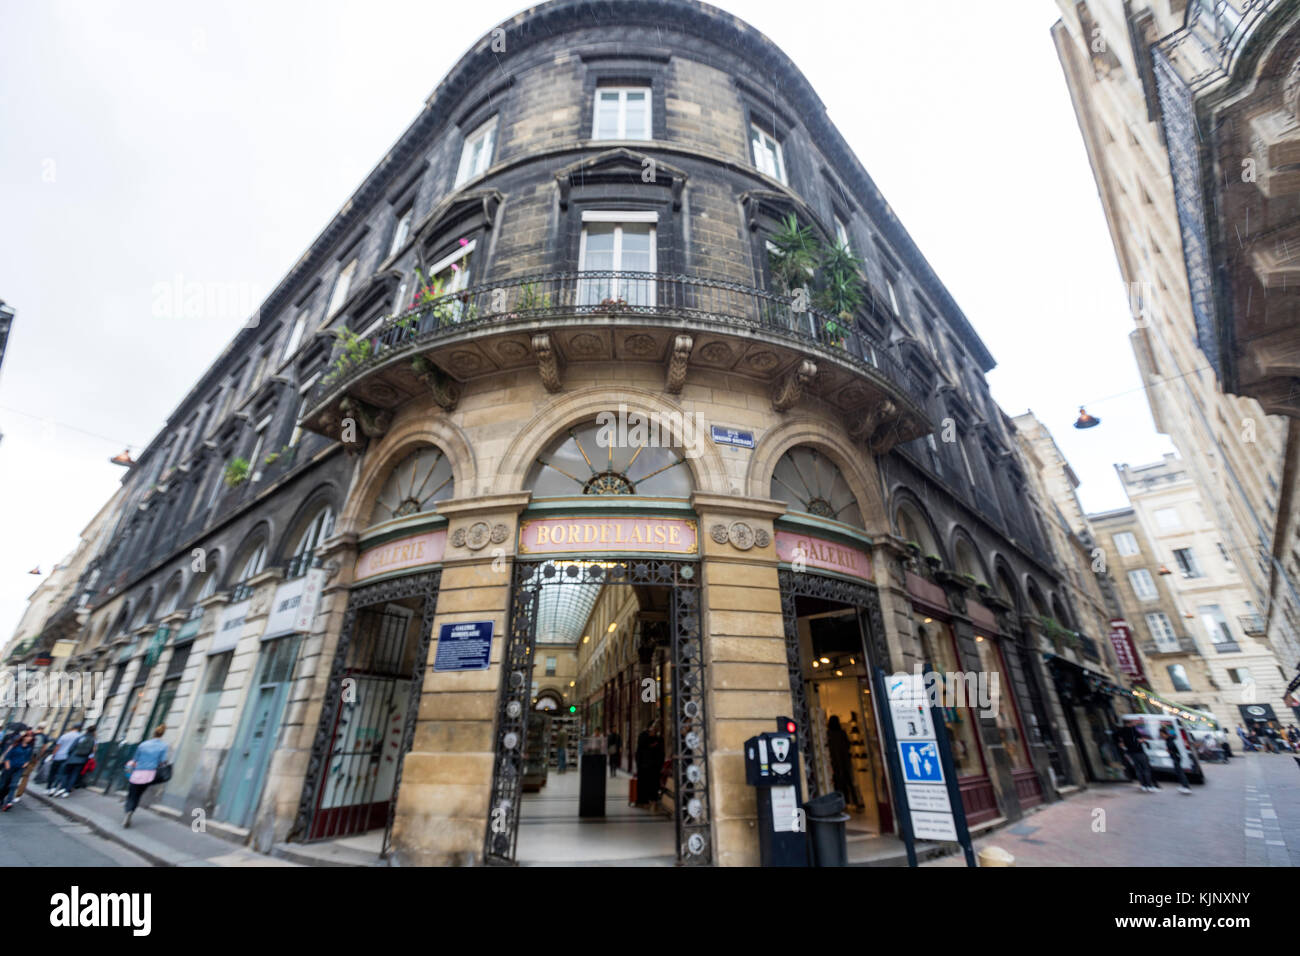 Entrance to Galerie bordelaise Arcade  in Bordeaux, France Stock Photo